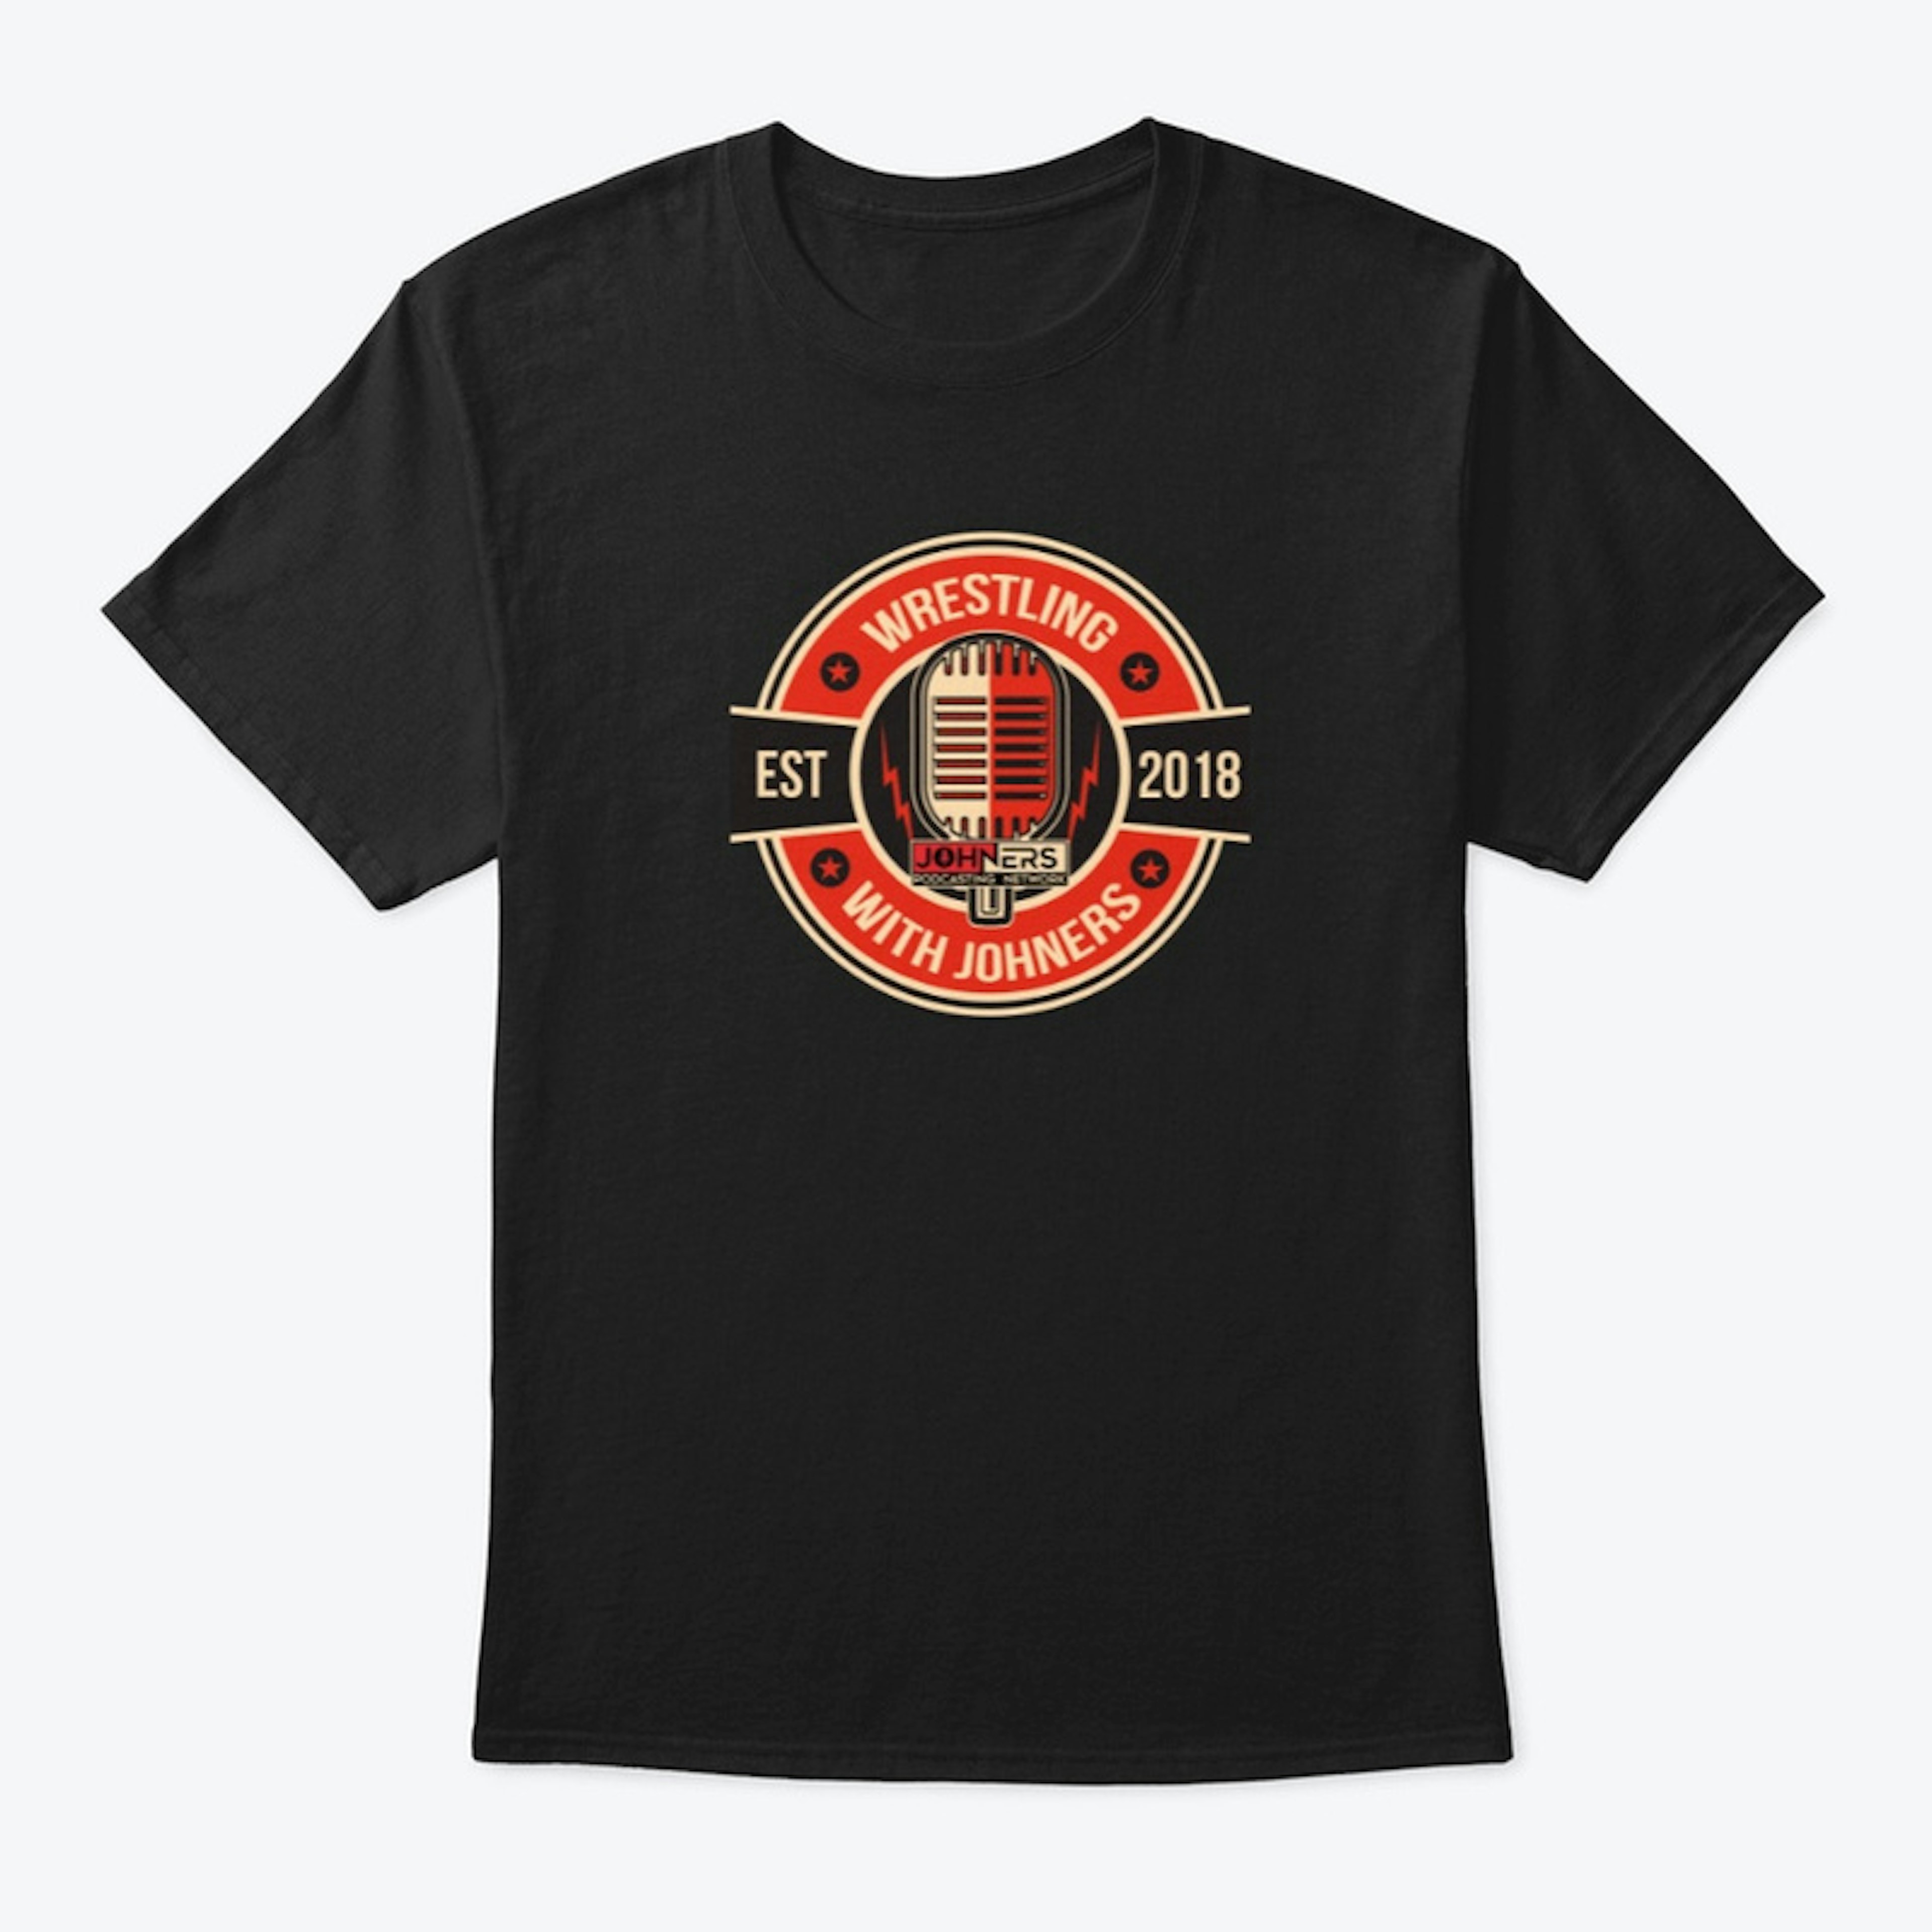 Johners Podcast (Est. 2018) T-Shirt